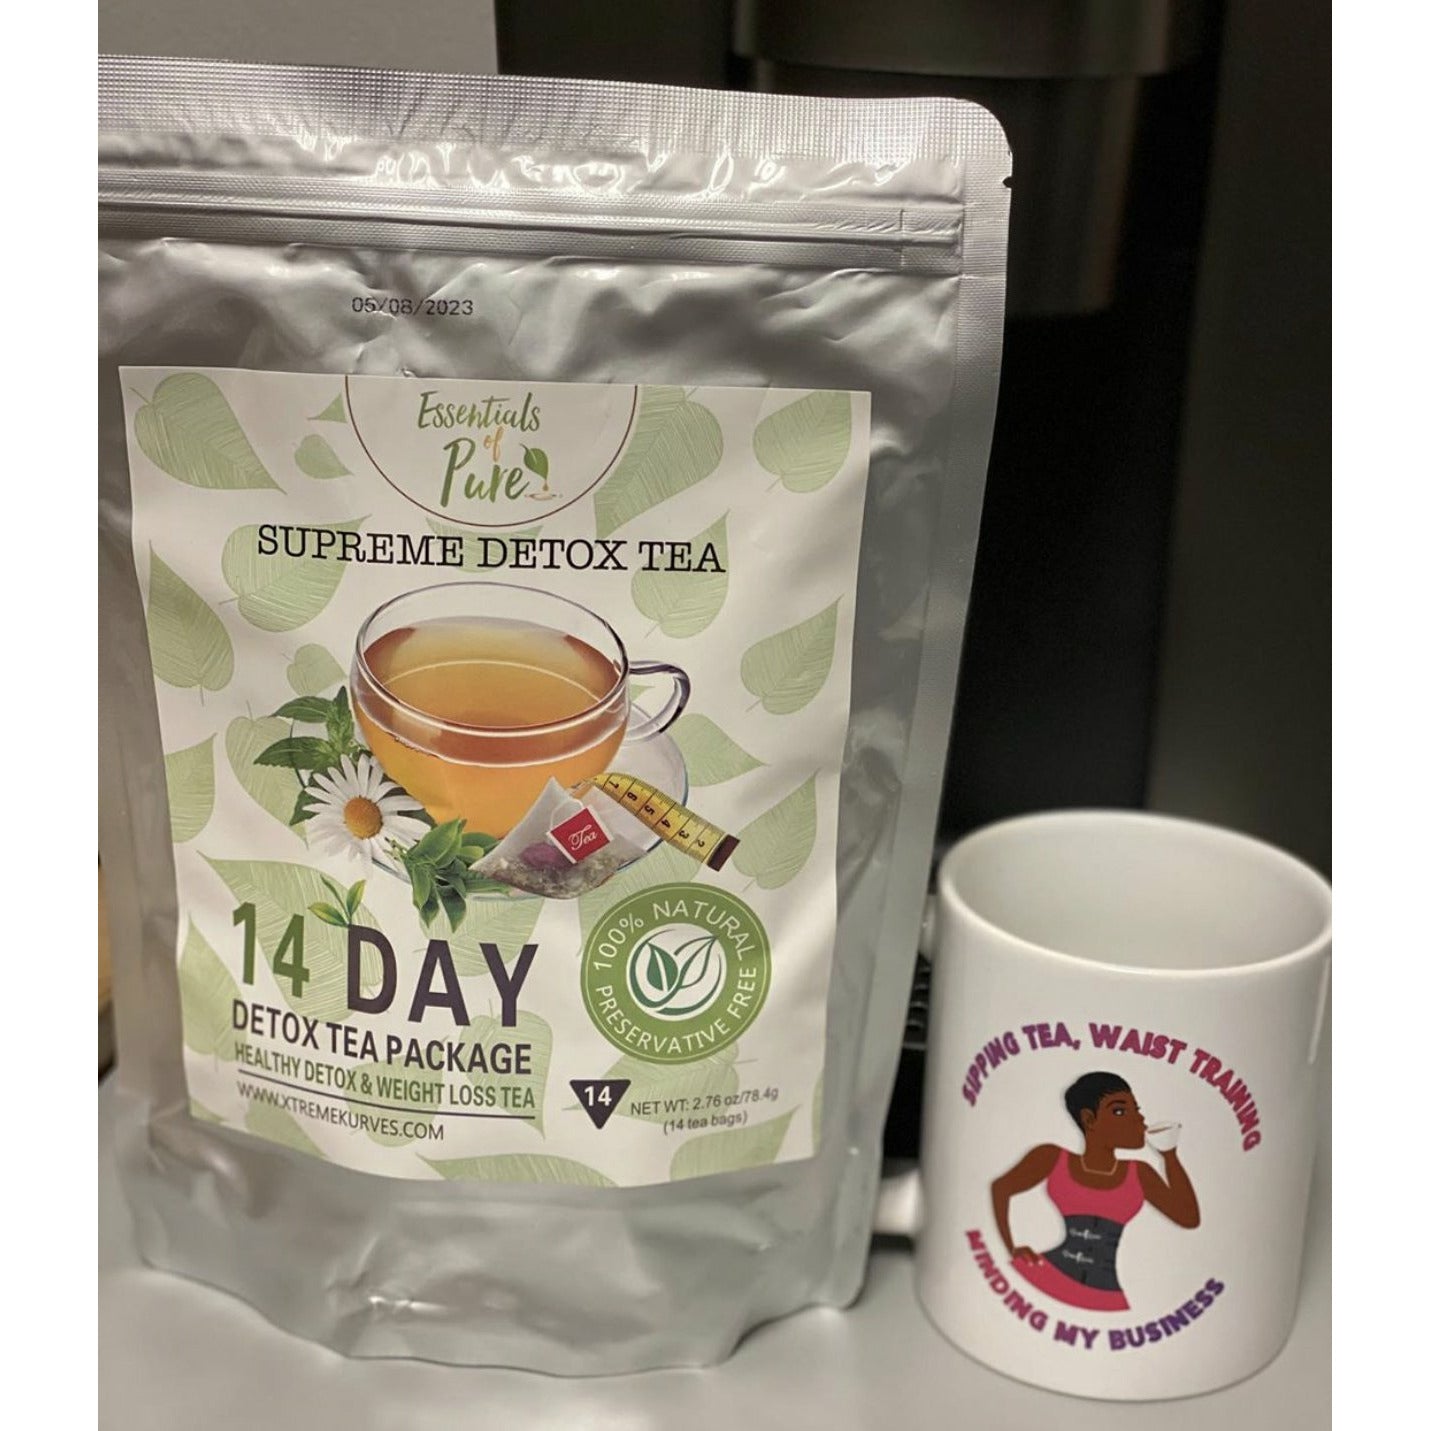 (1) Pack of Supreme Detox Tea (14 Days)